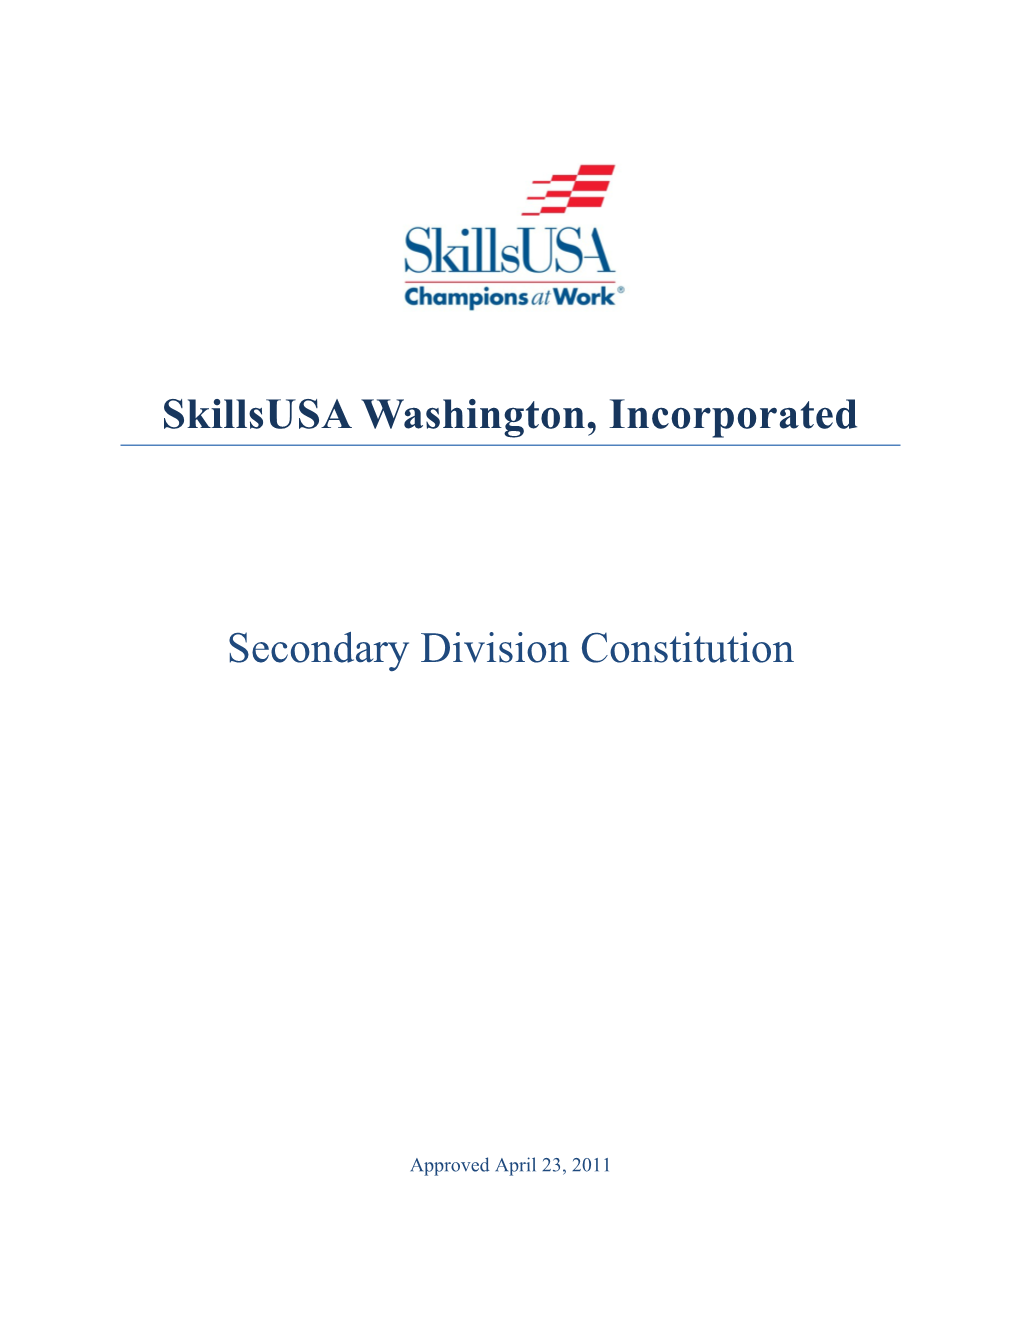 Skillsusa Washington, Incorporated